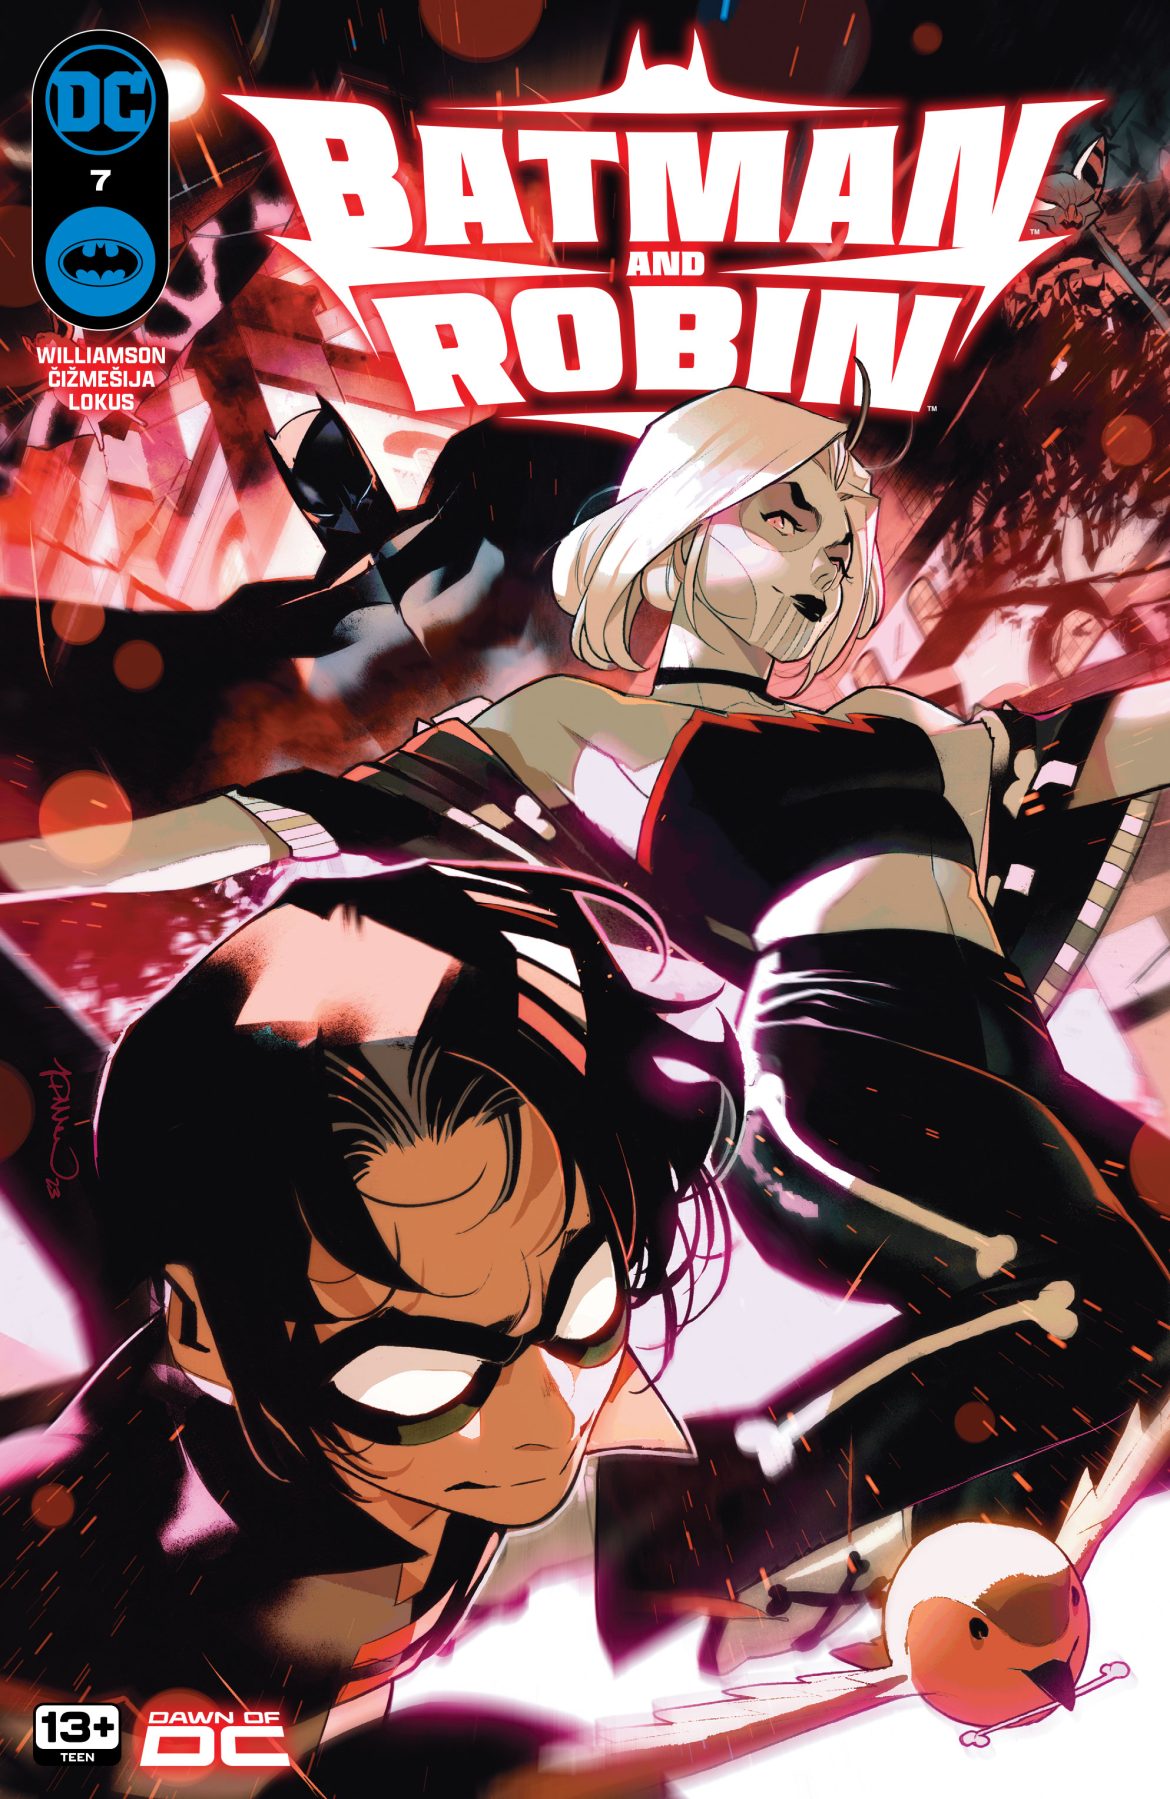 batman and robin #7 main cover